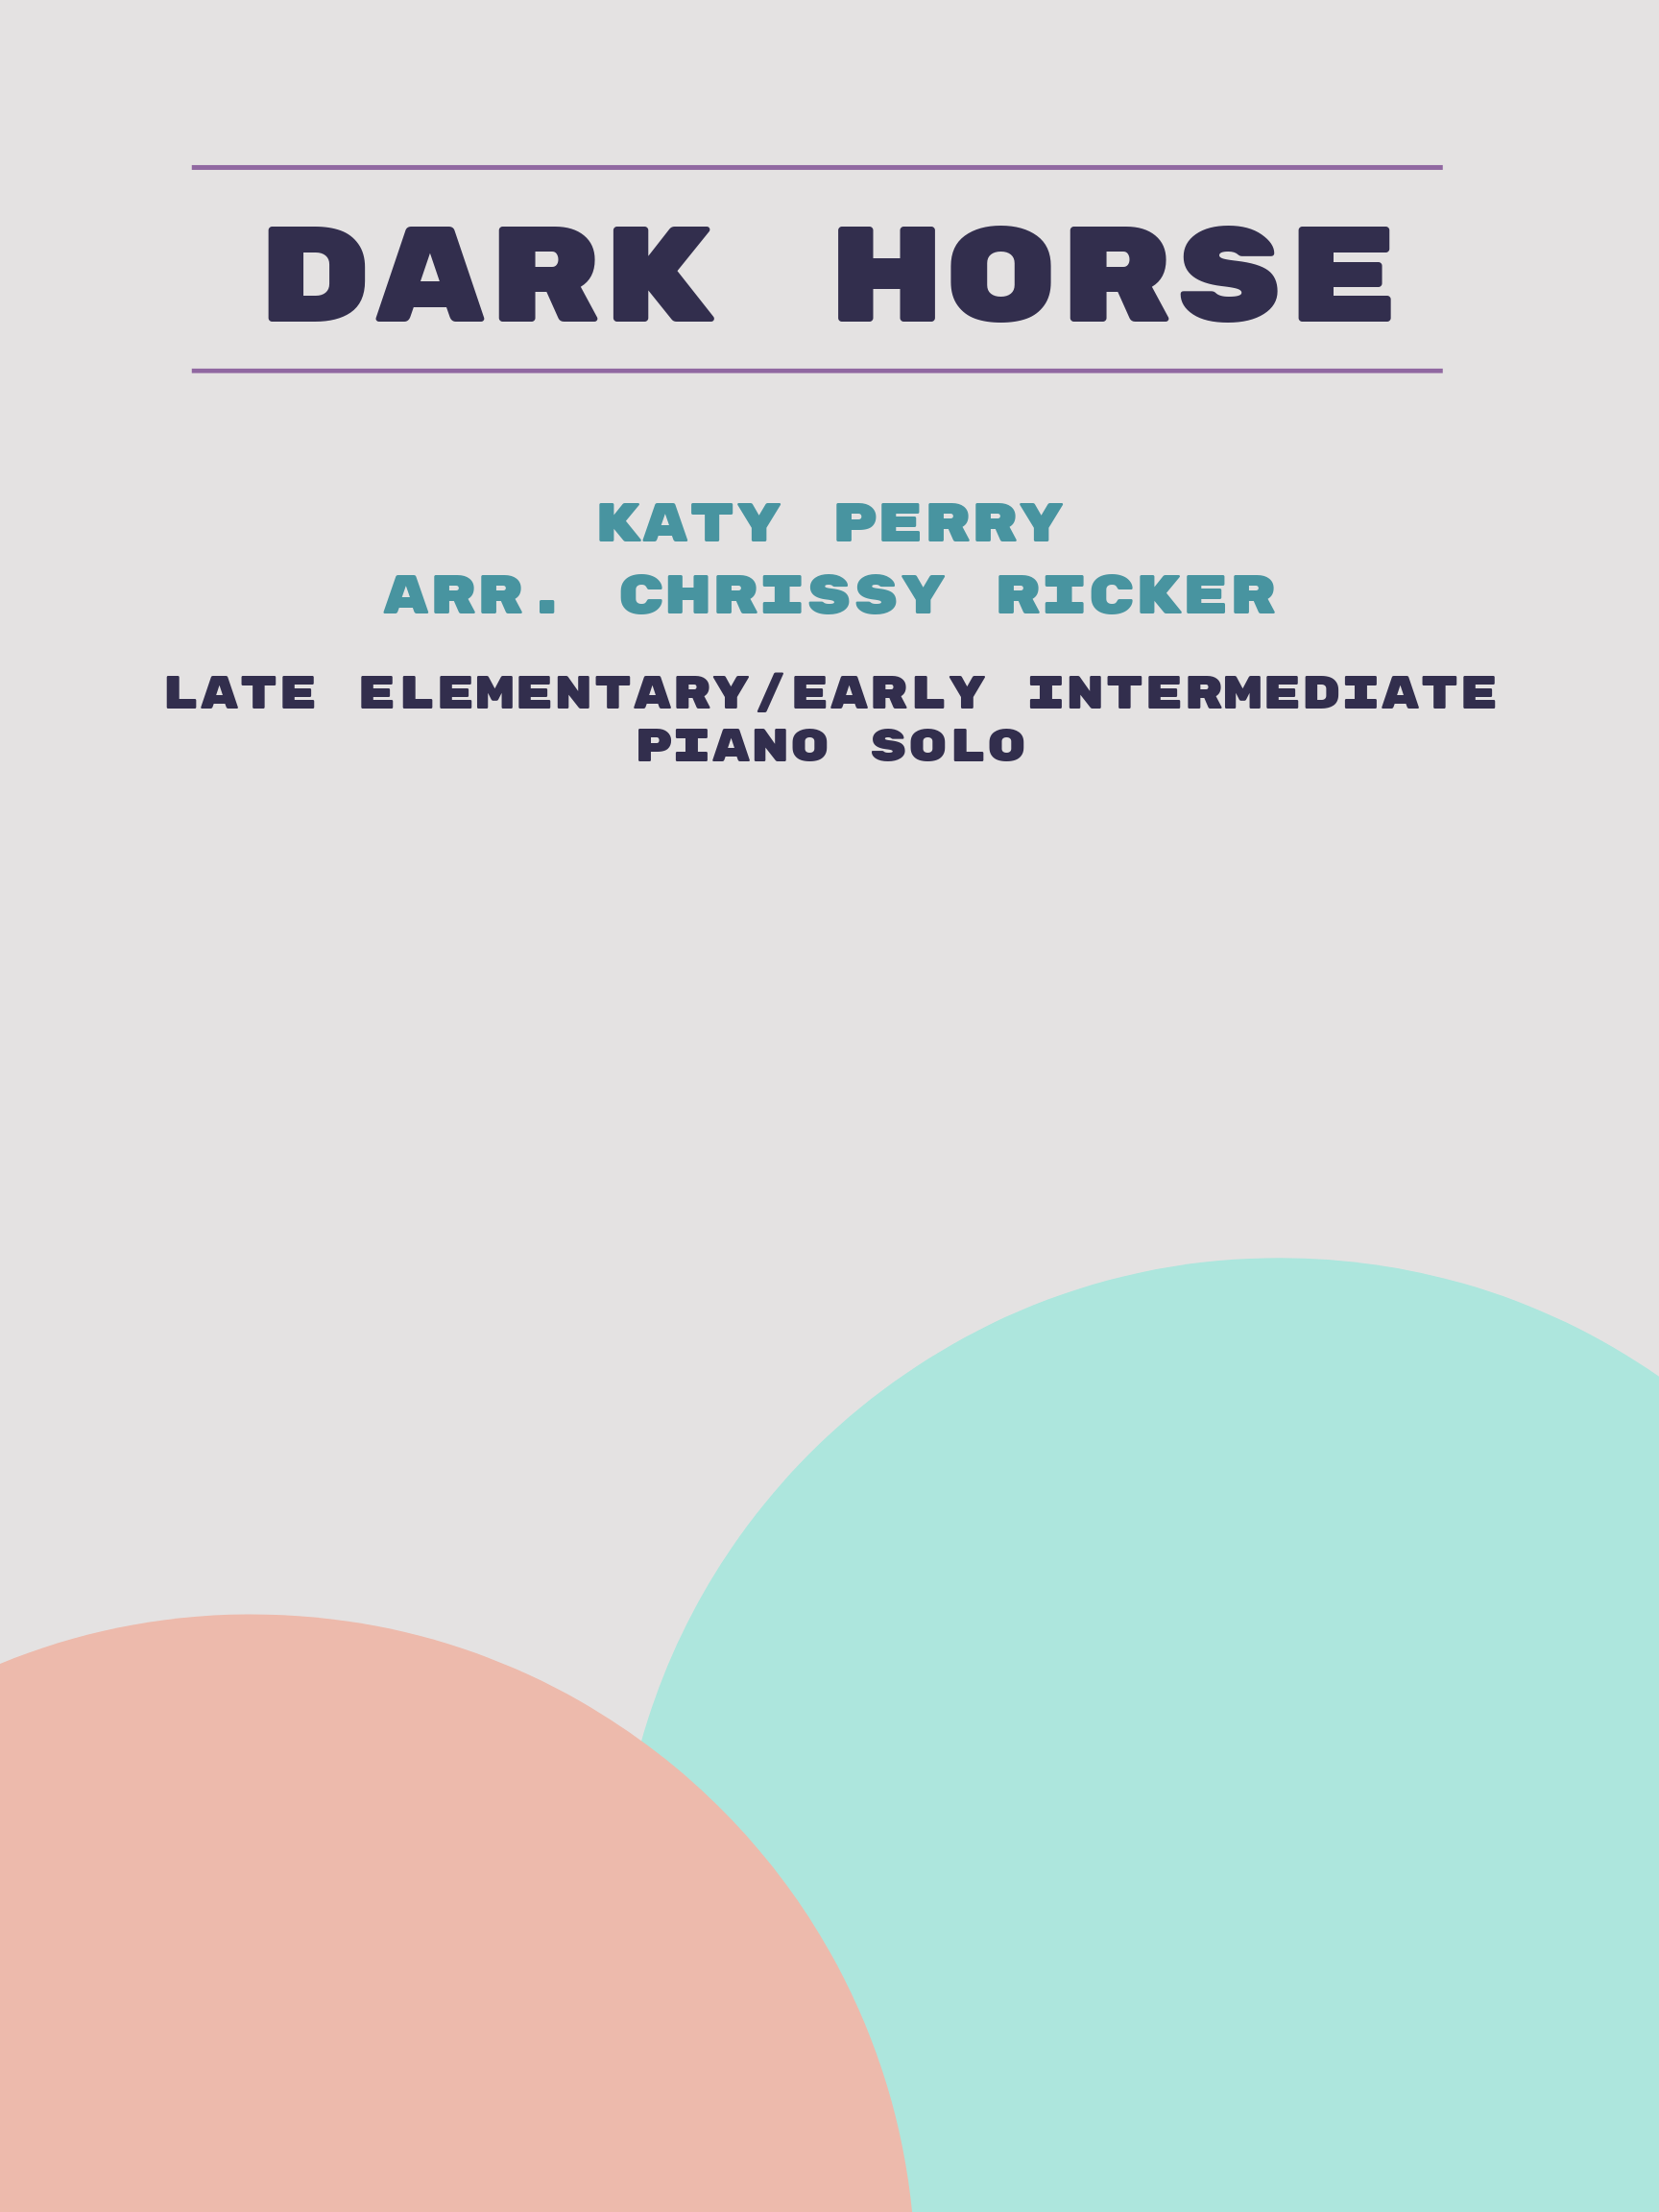 Dark Horse by Katy Perry